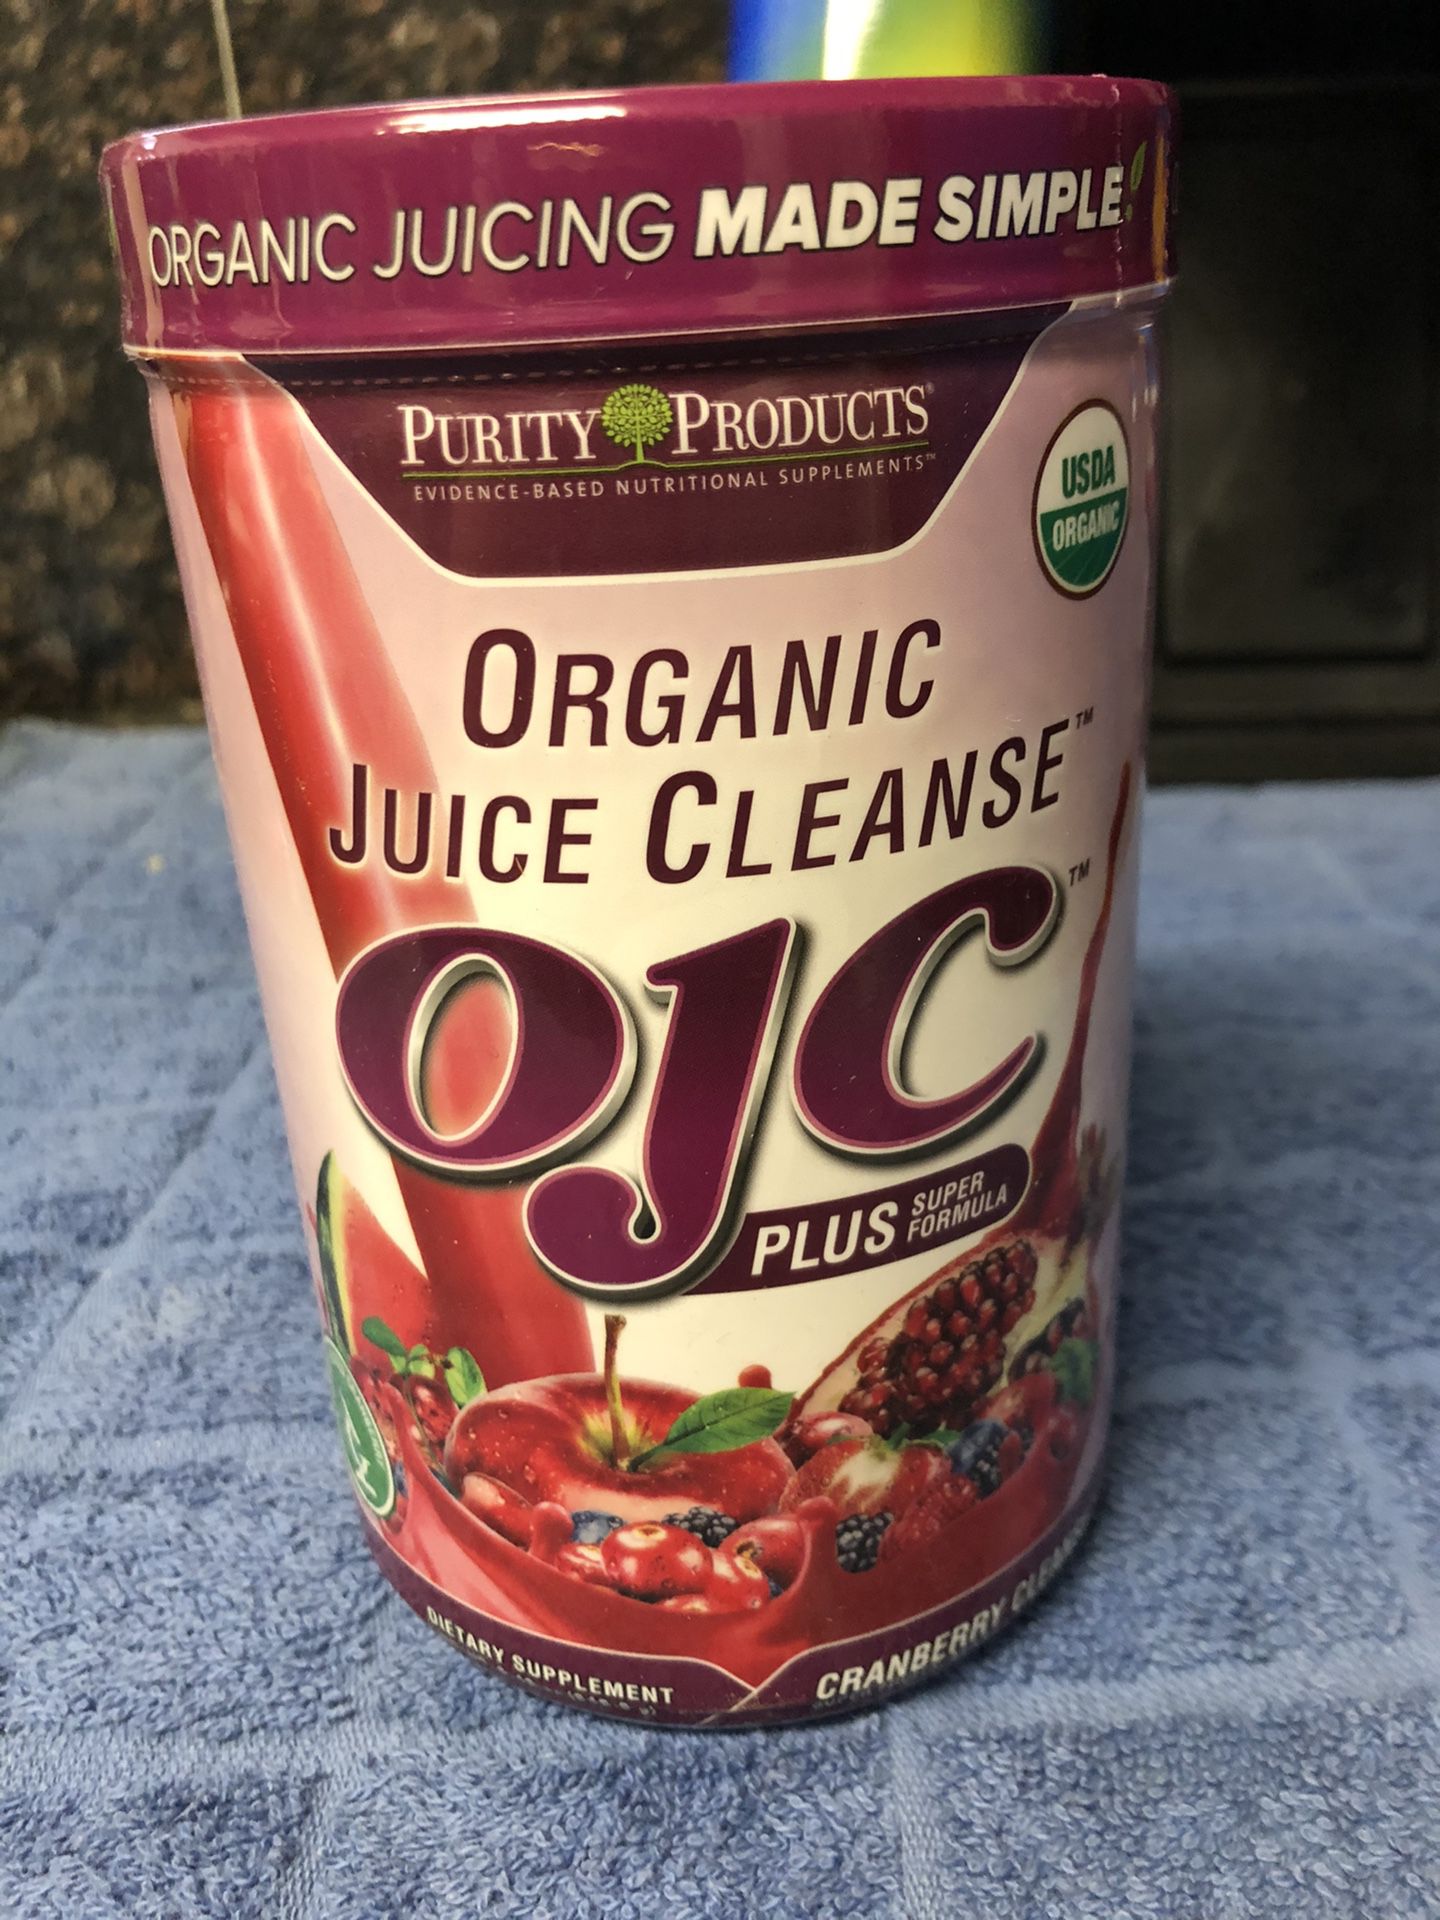 Organic Juice cleanse